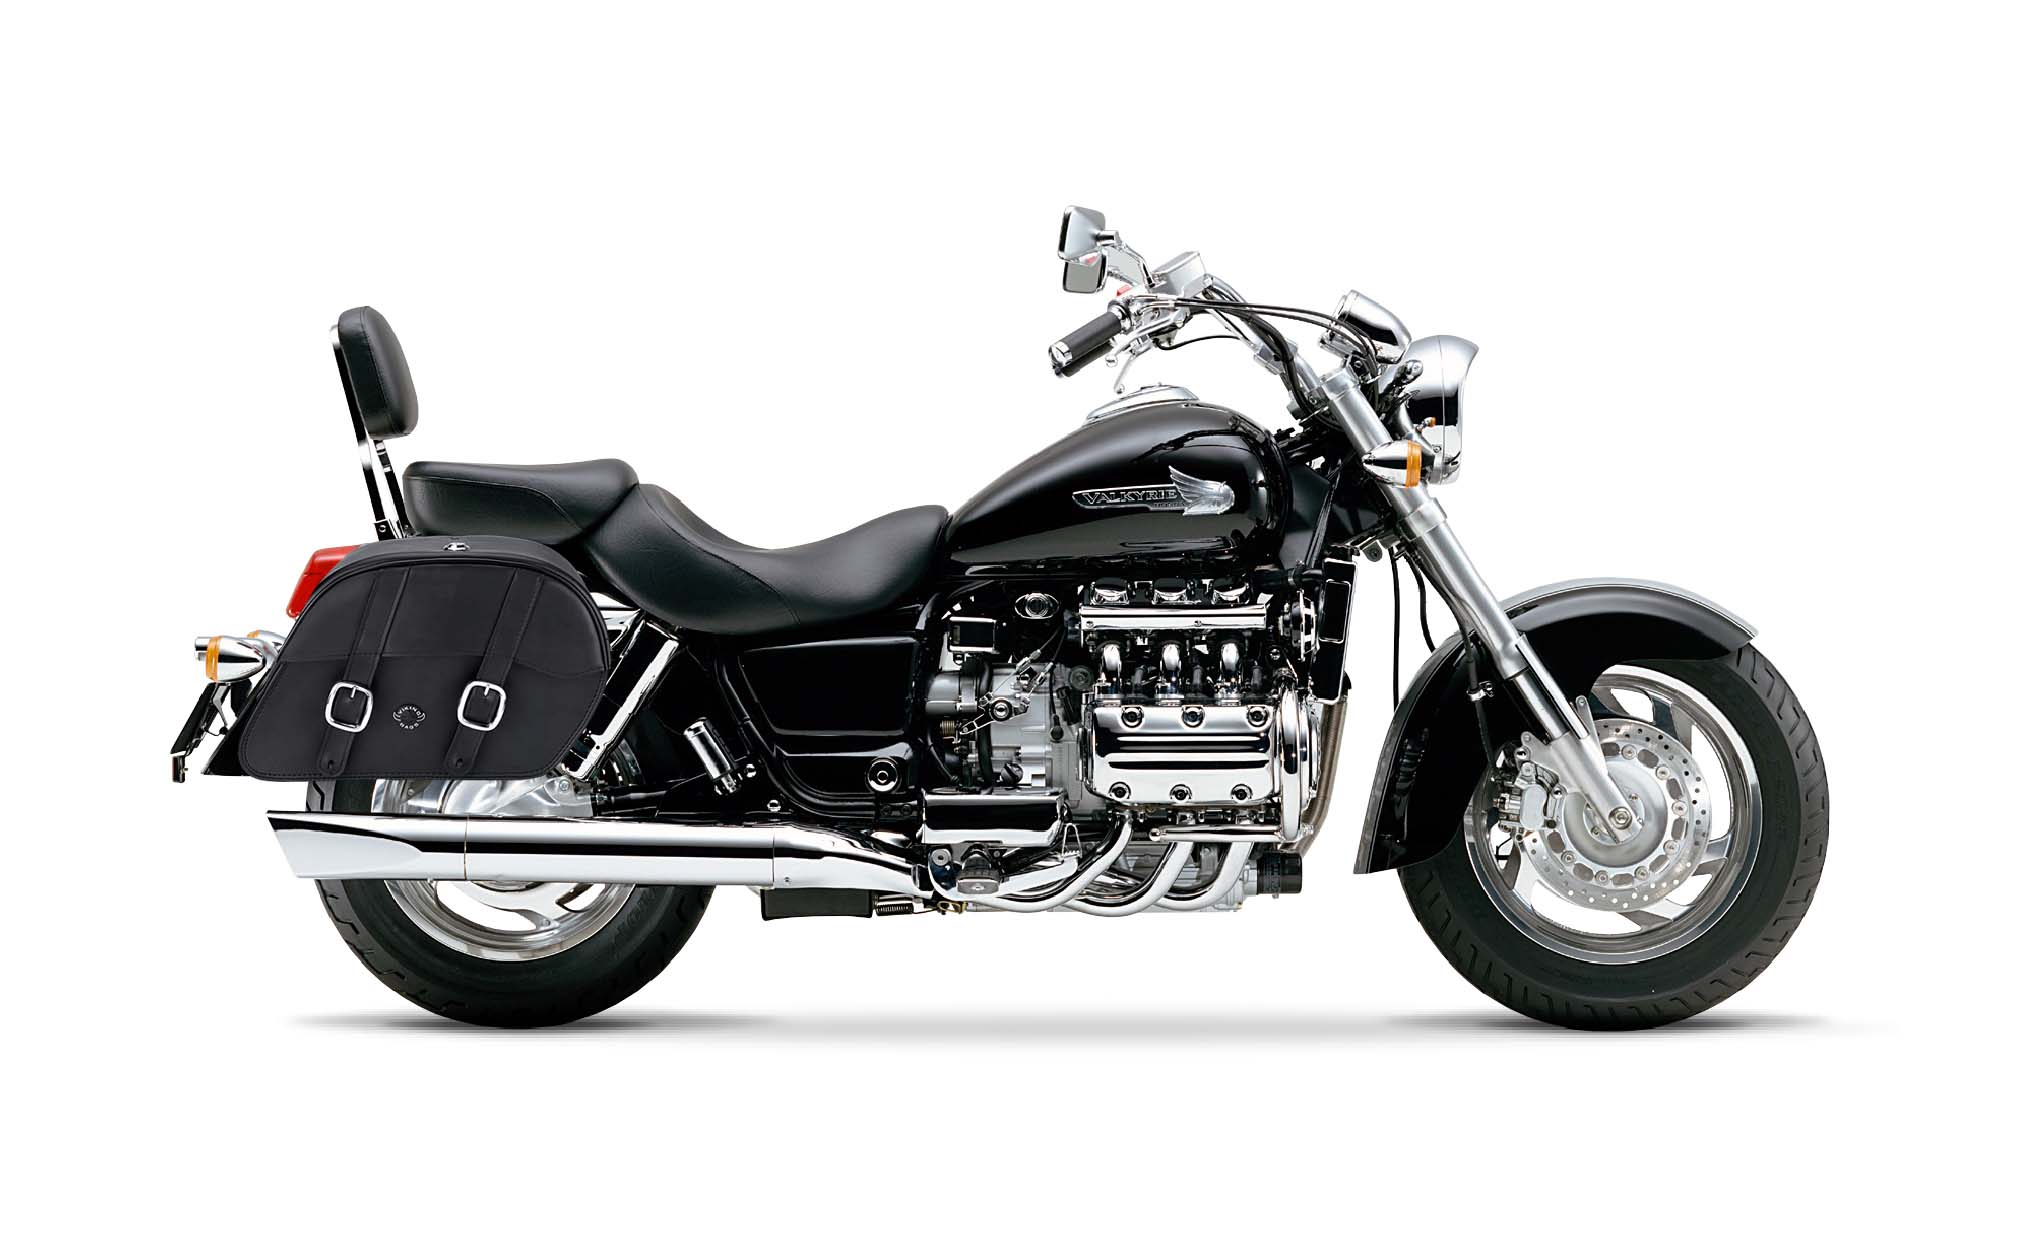 Viking Skarner Large Honda Valkyrie 1500 Standard Shock Cut Out Leather Motorcycle Saddlebags on Bike Photo @expand